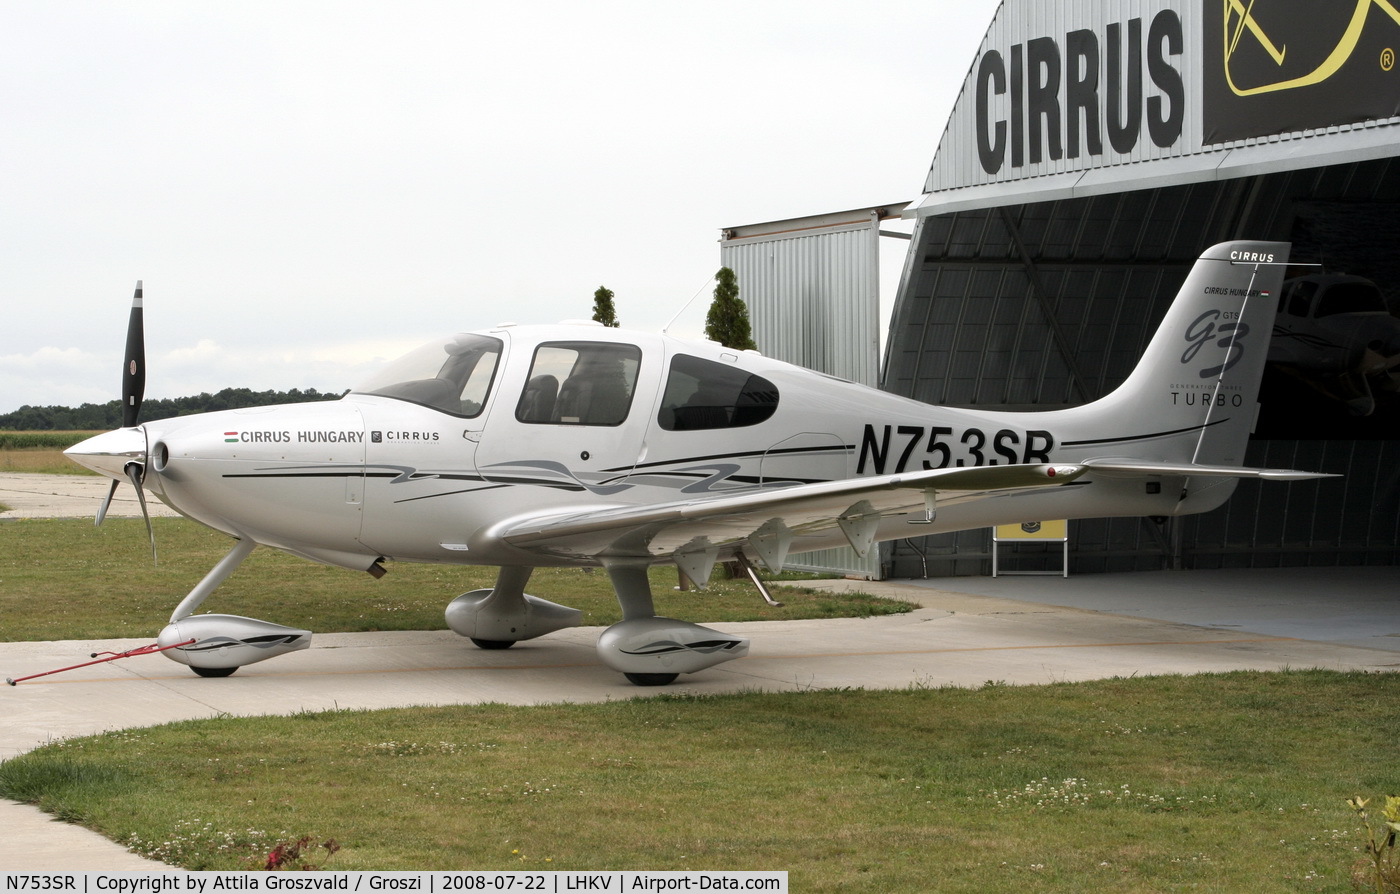 N753SR, 2008 Cirrus SR22 G3 GTS Turbo C/N 2759, Kaposújlak airport (LHKV) / Cirrus Hungary base